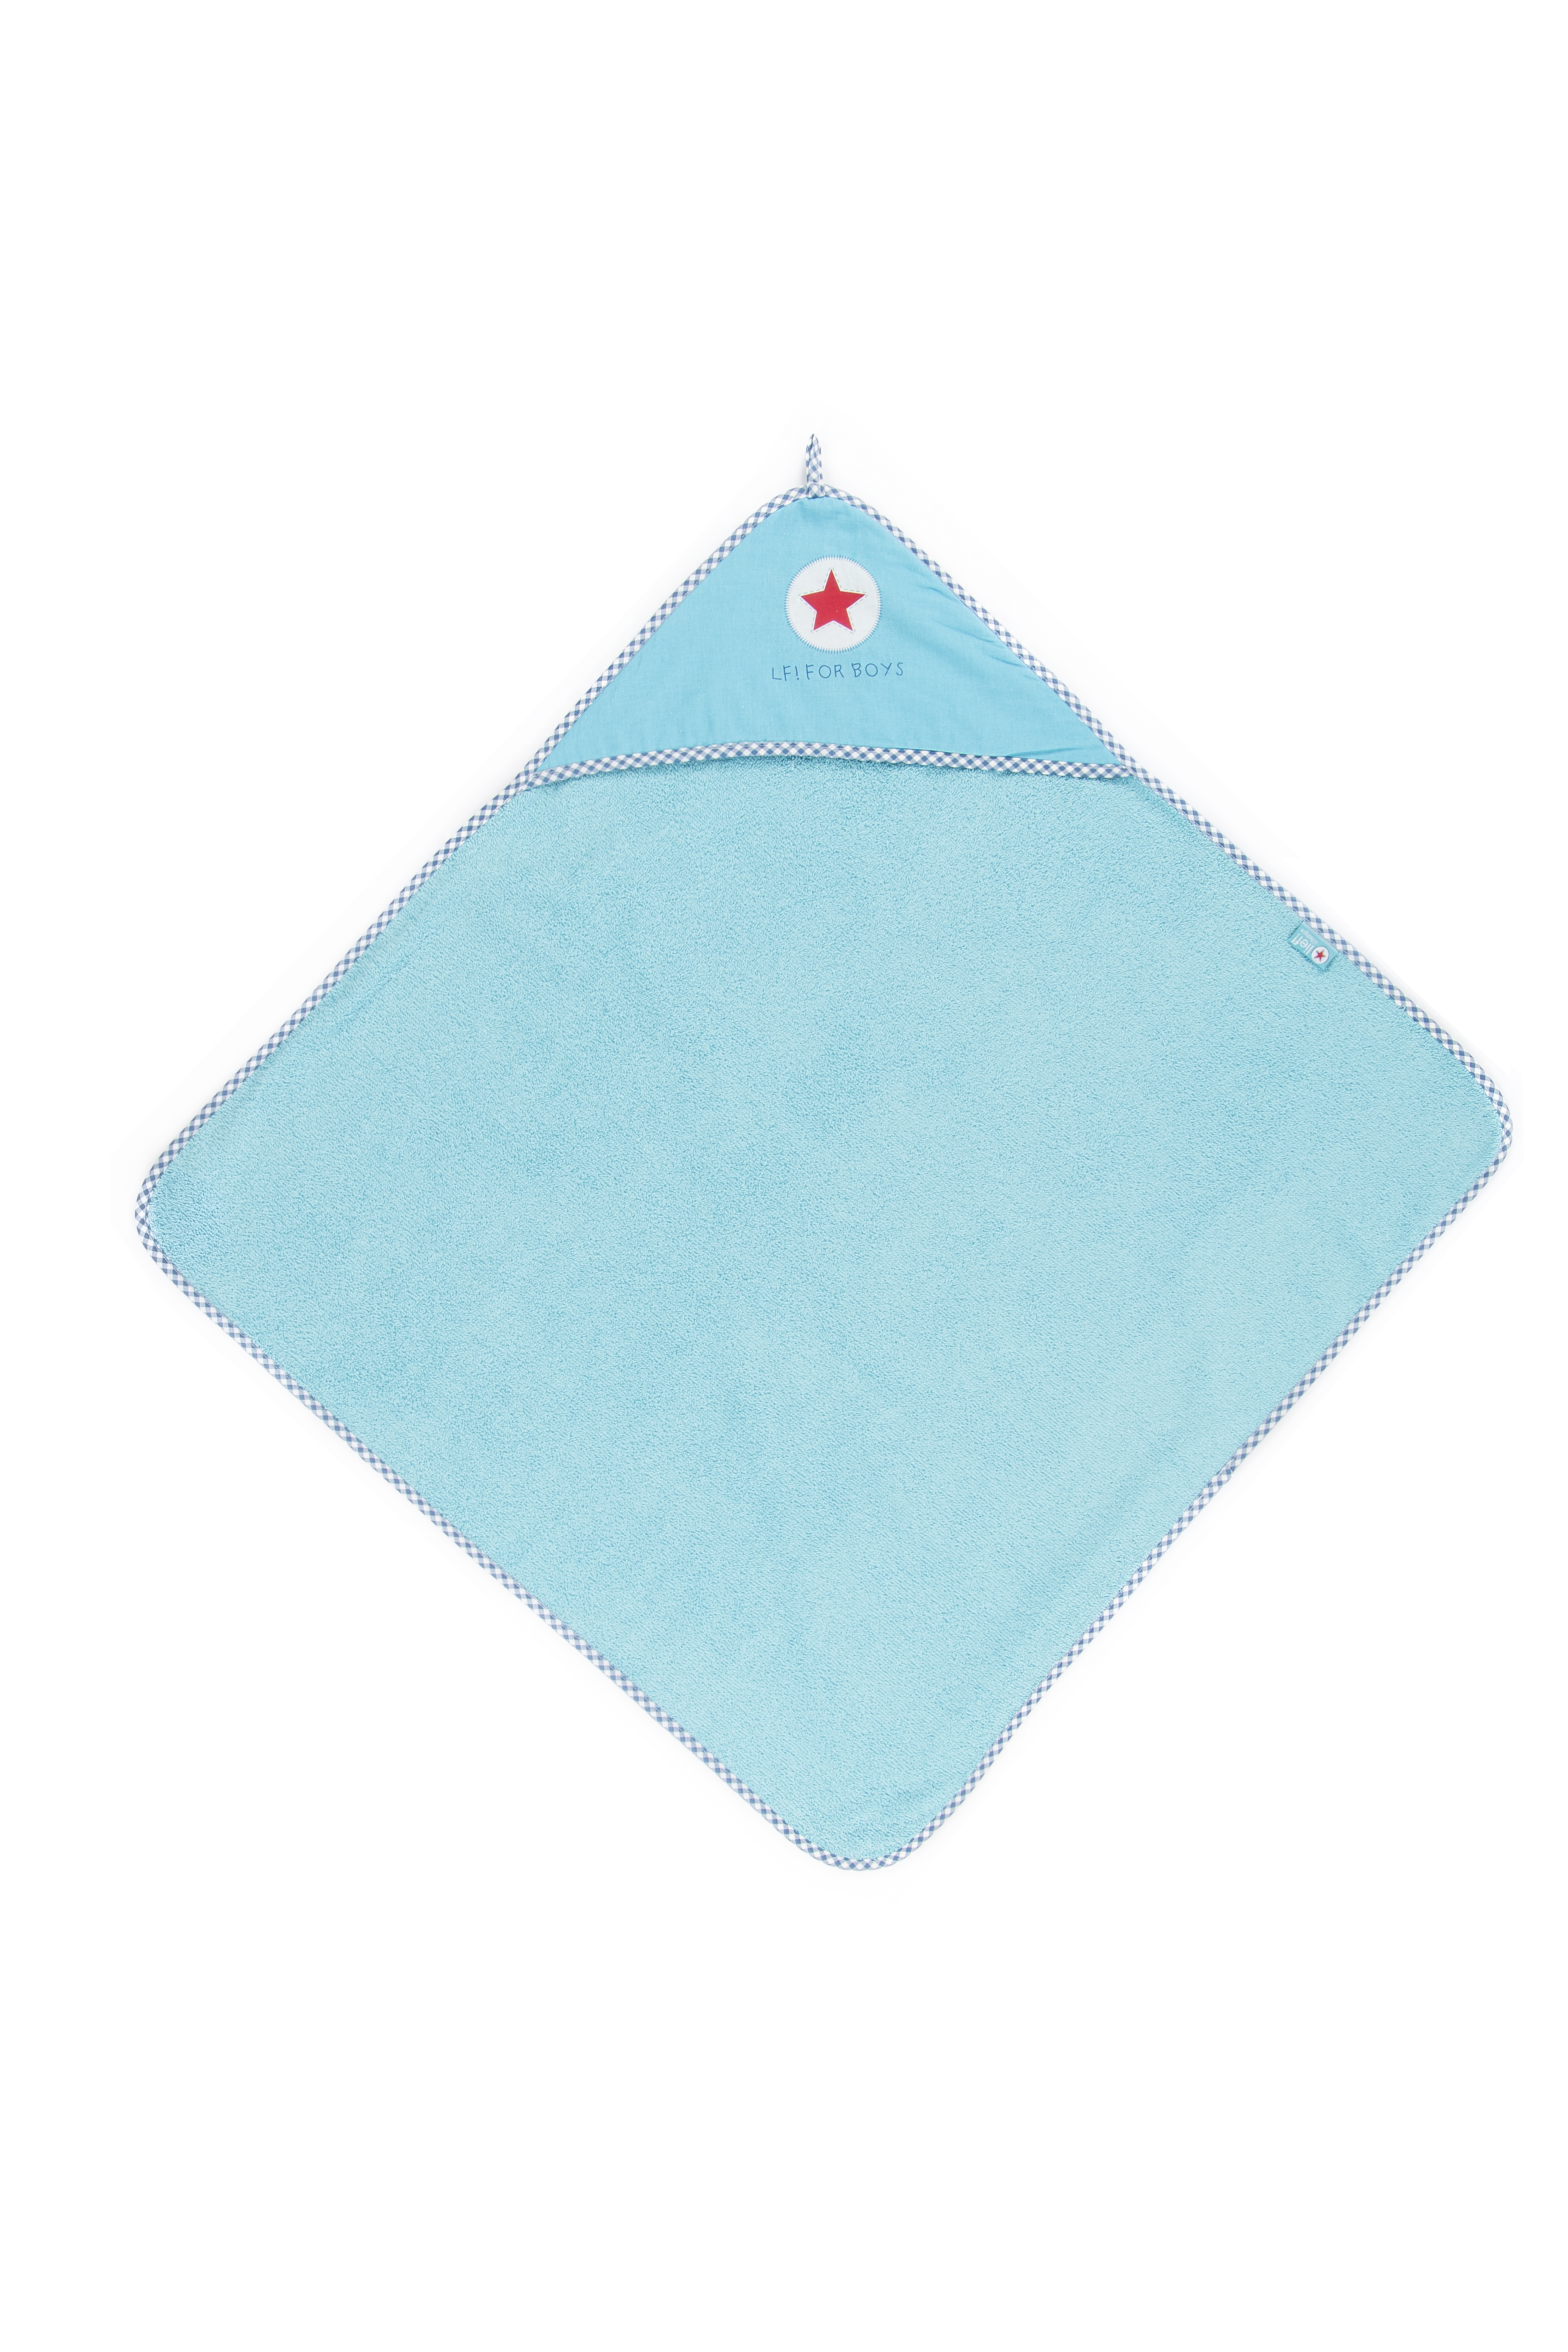 Hooded towel Boy uni turquoise, 75x75 cm